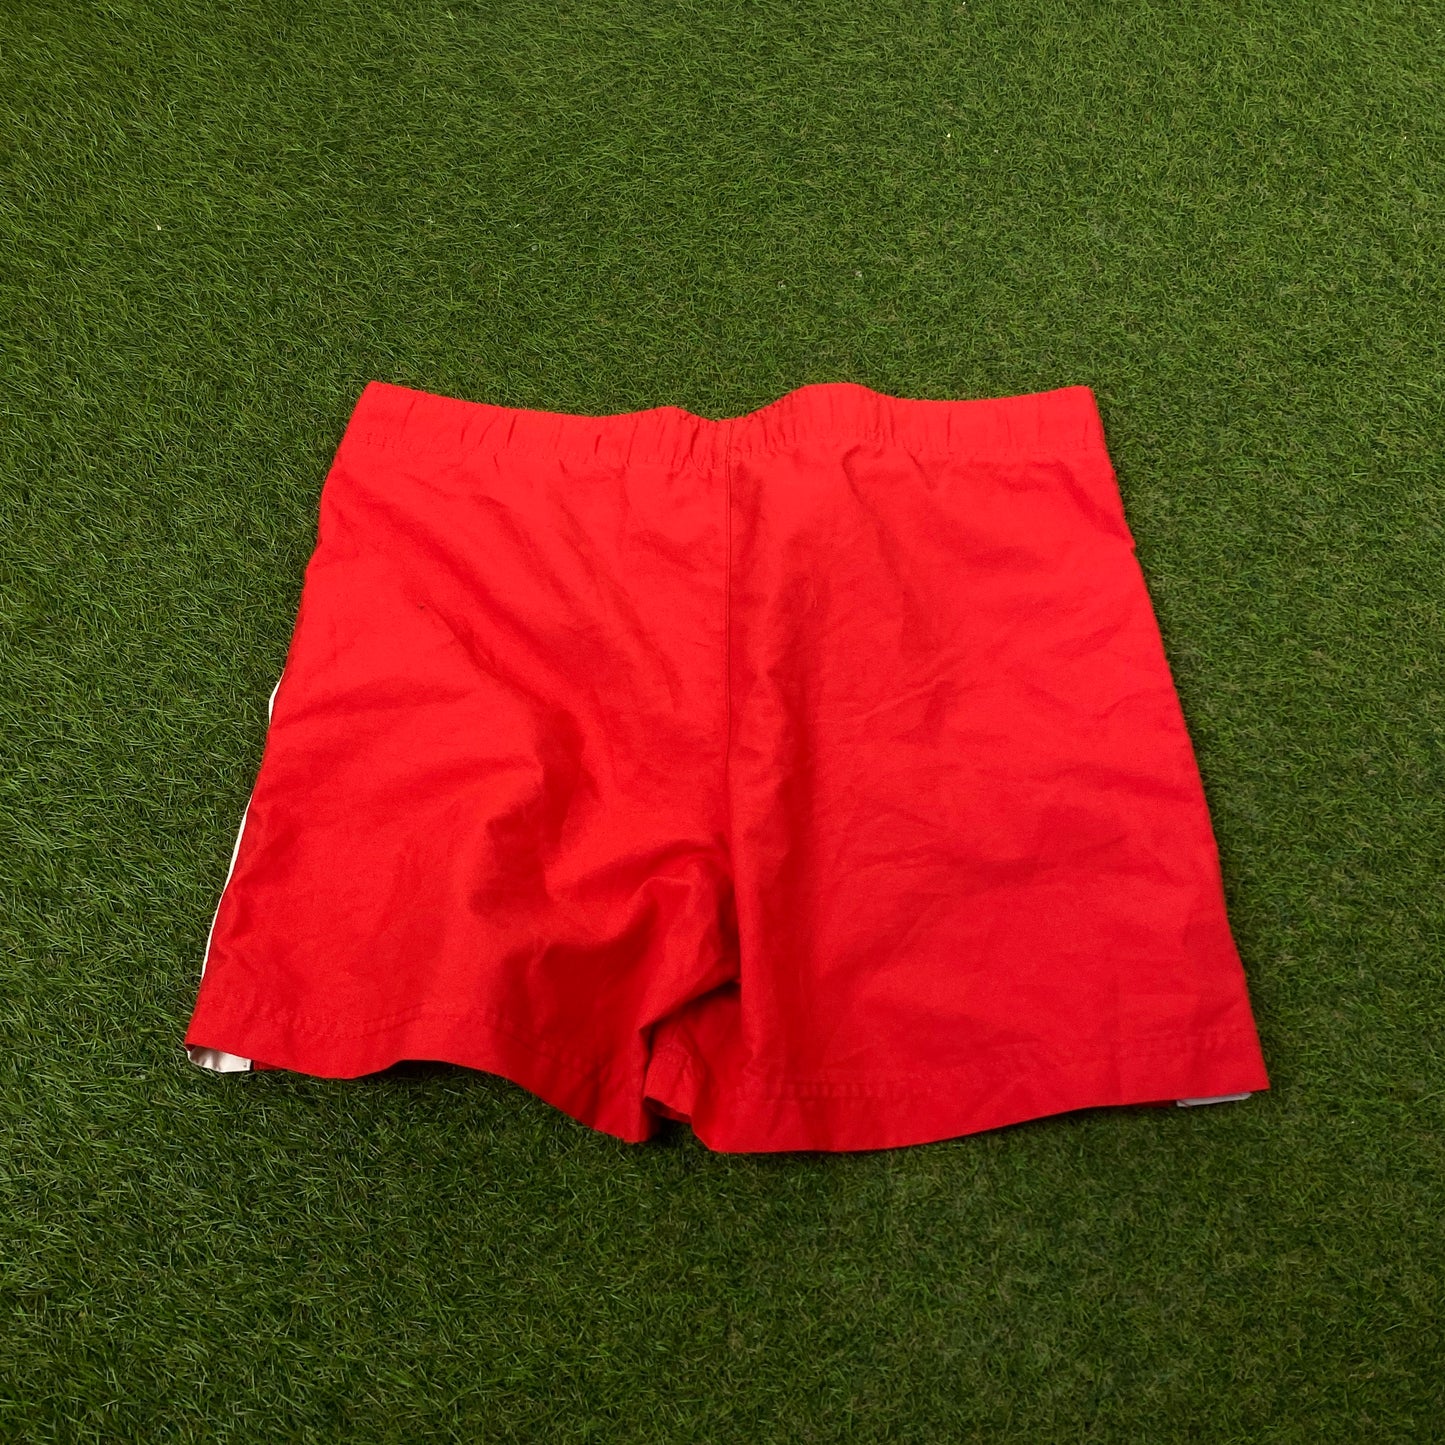 90s Nike Stripe Shorts Red Large